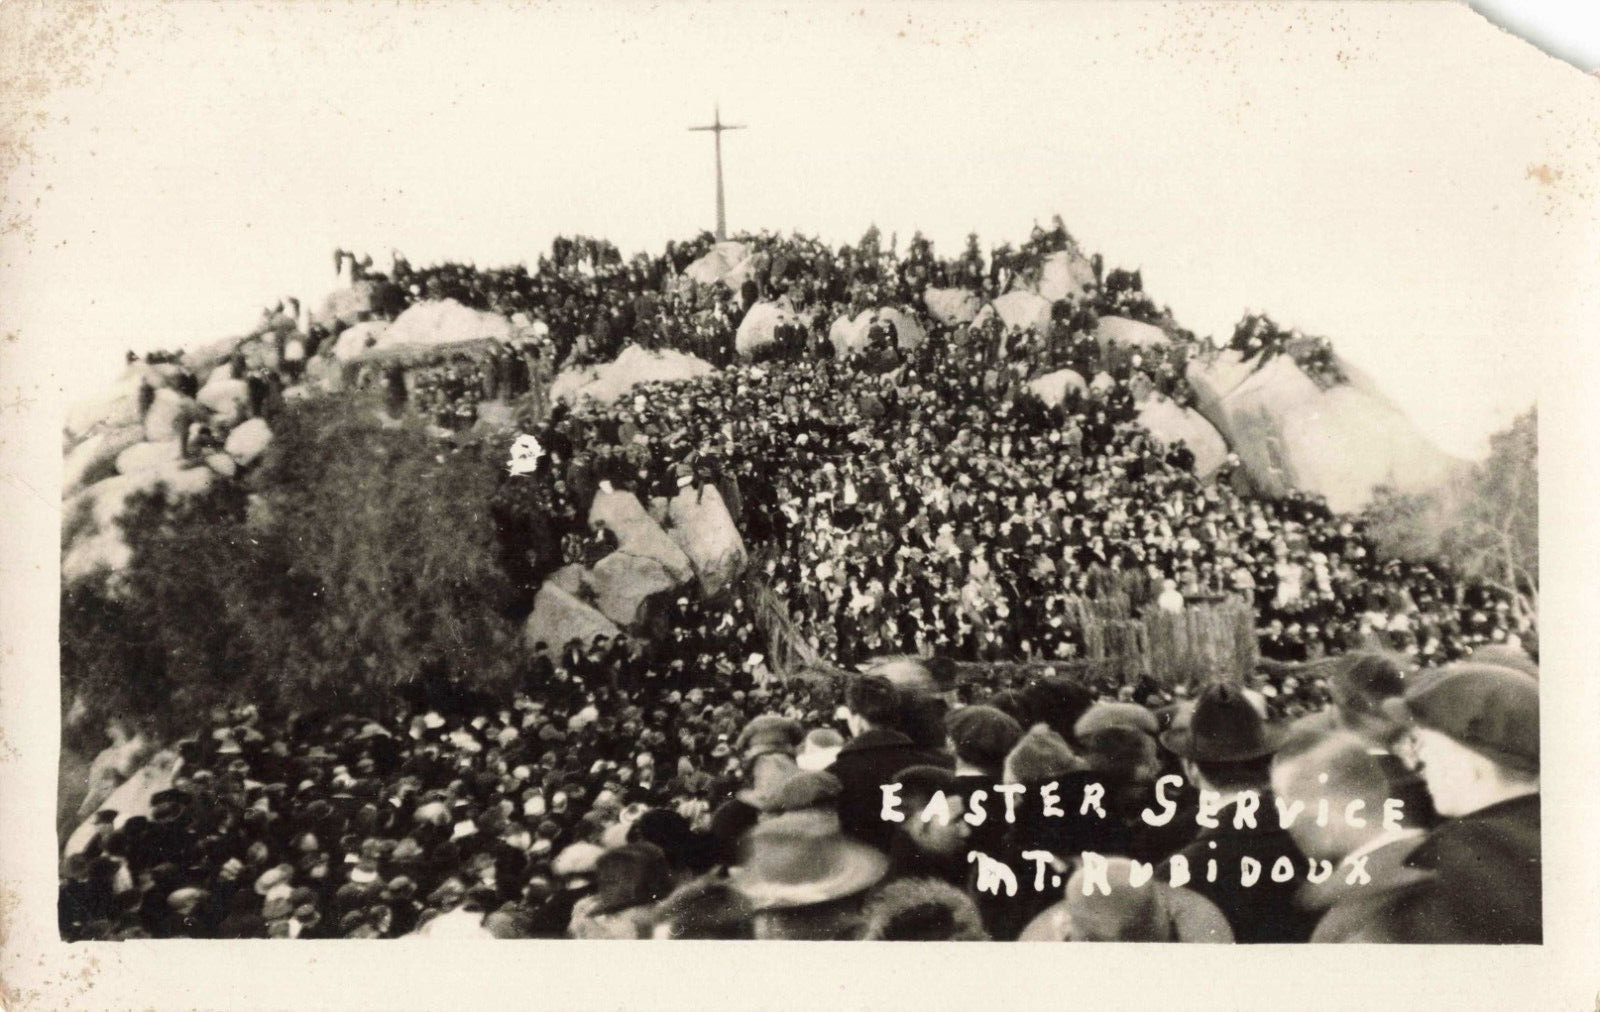 Riverside California, Easter Service Mt. Rubidoux, VTG RPPC Real Photo Postcard